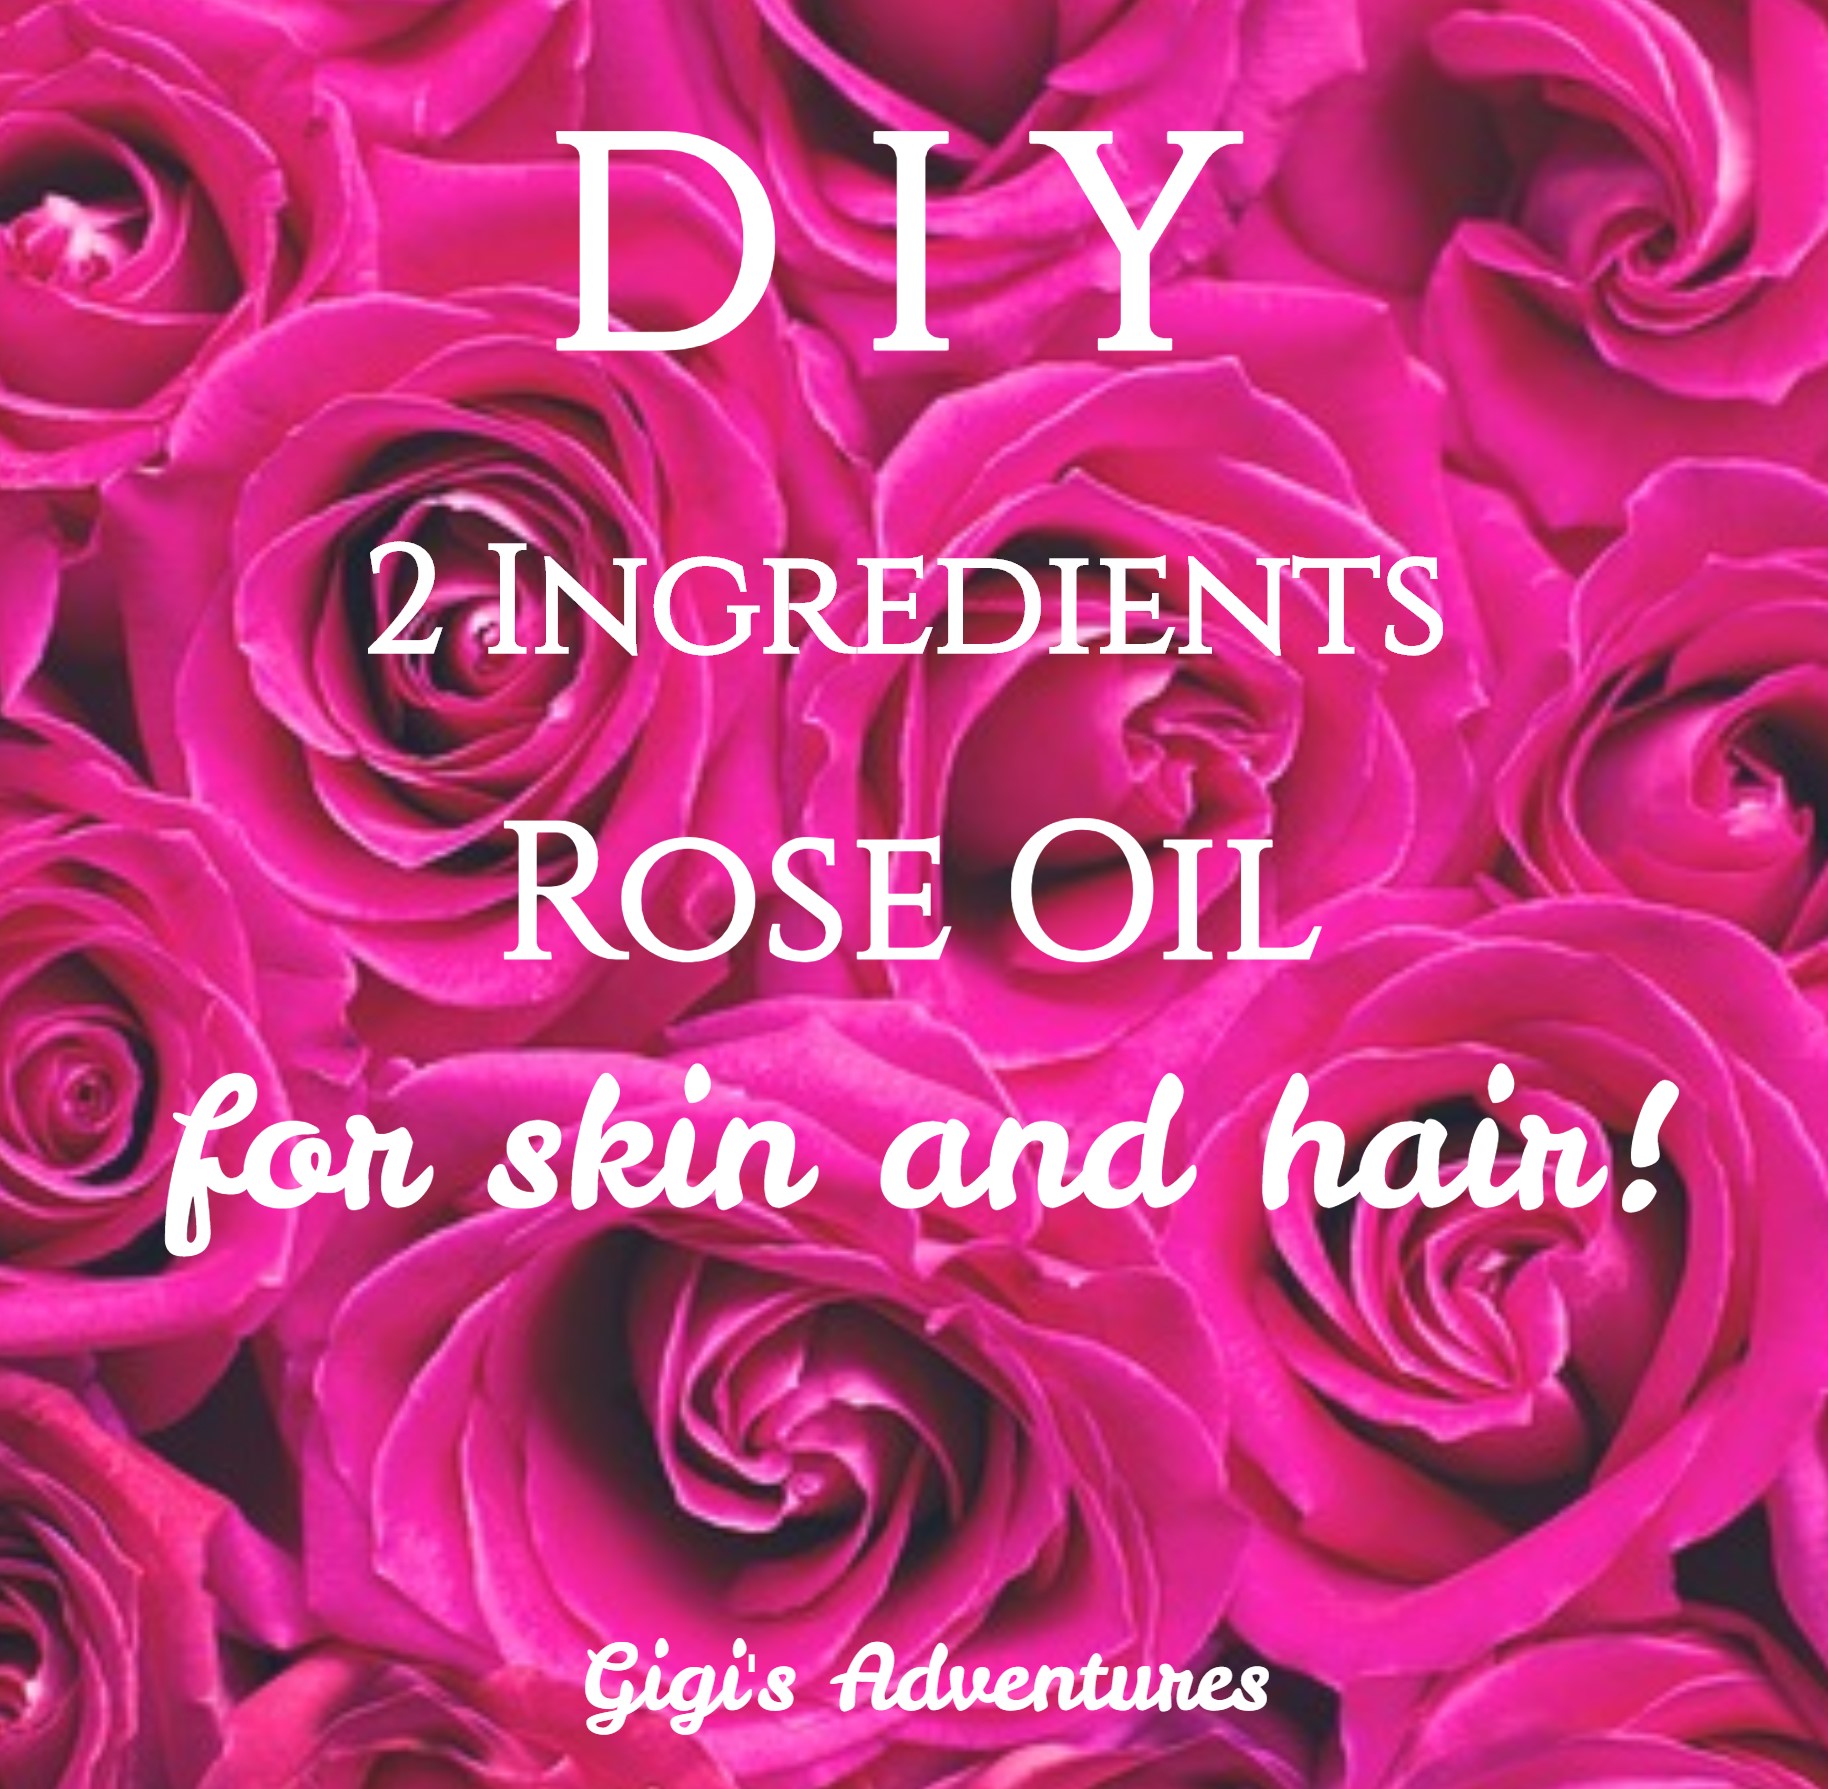 DIY 2 Ingredients Rose Oil for skin and hair